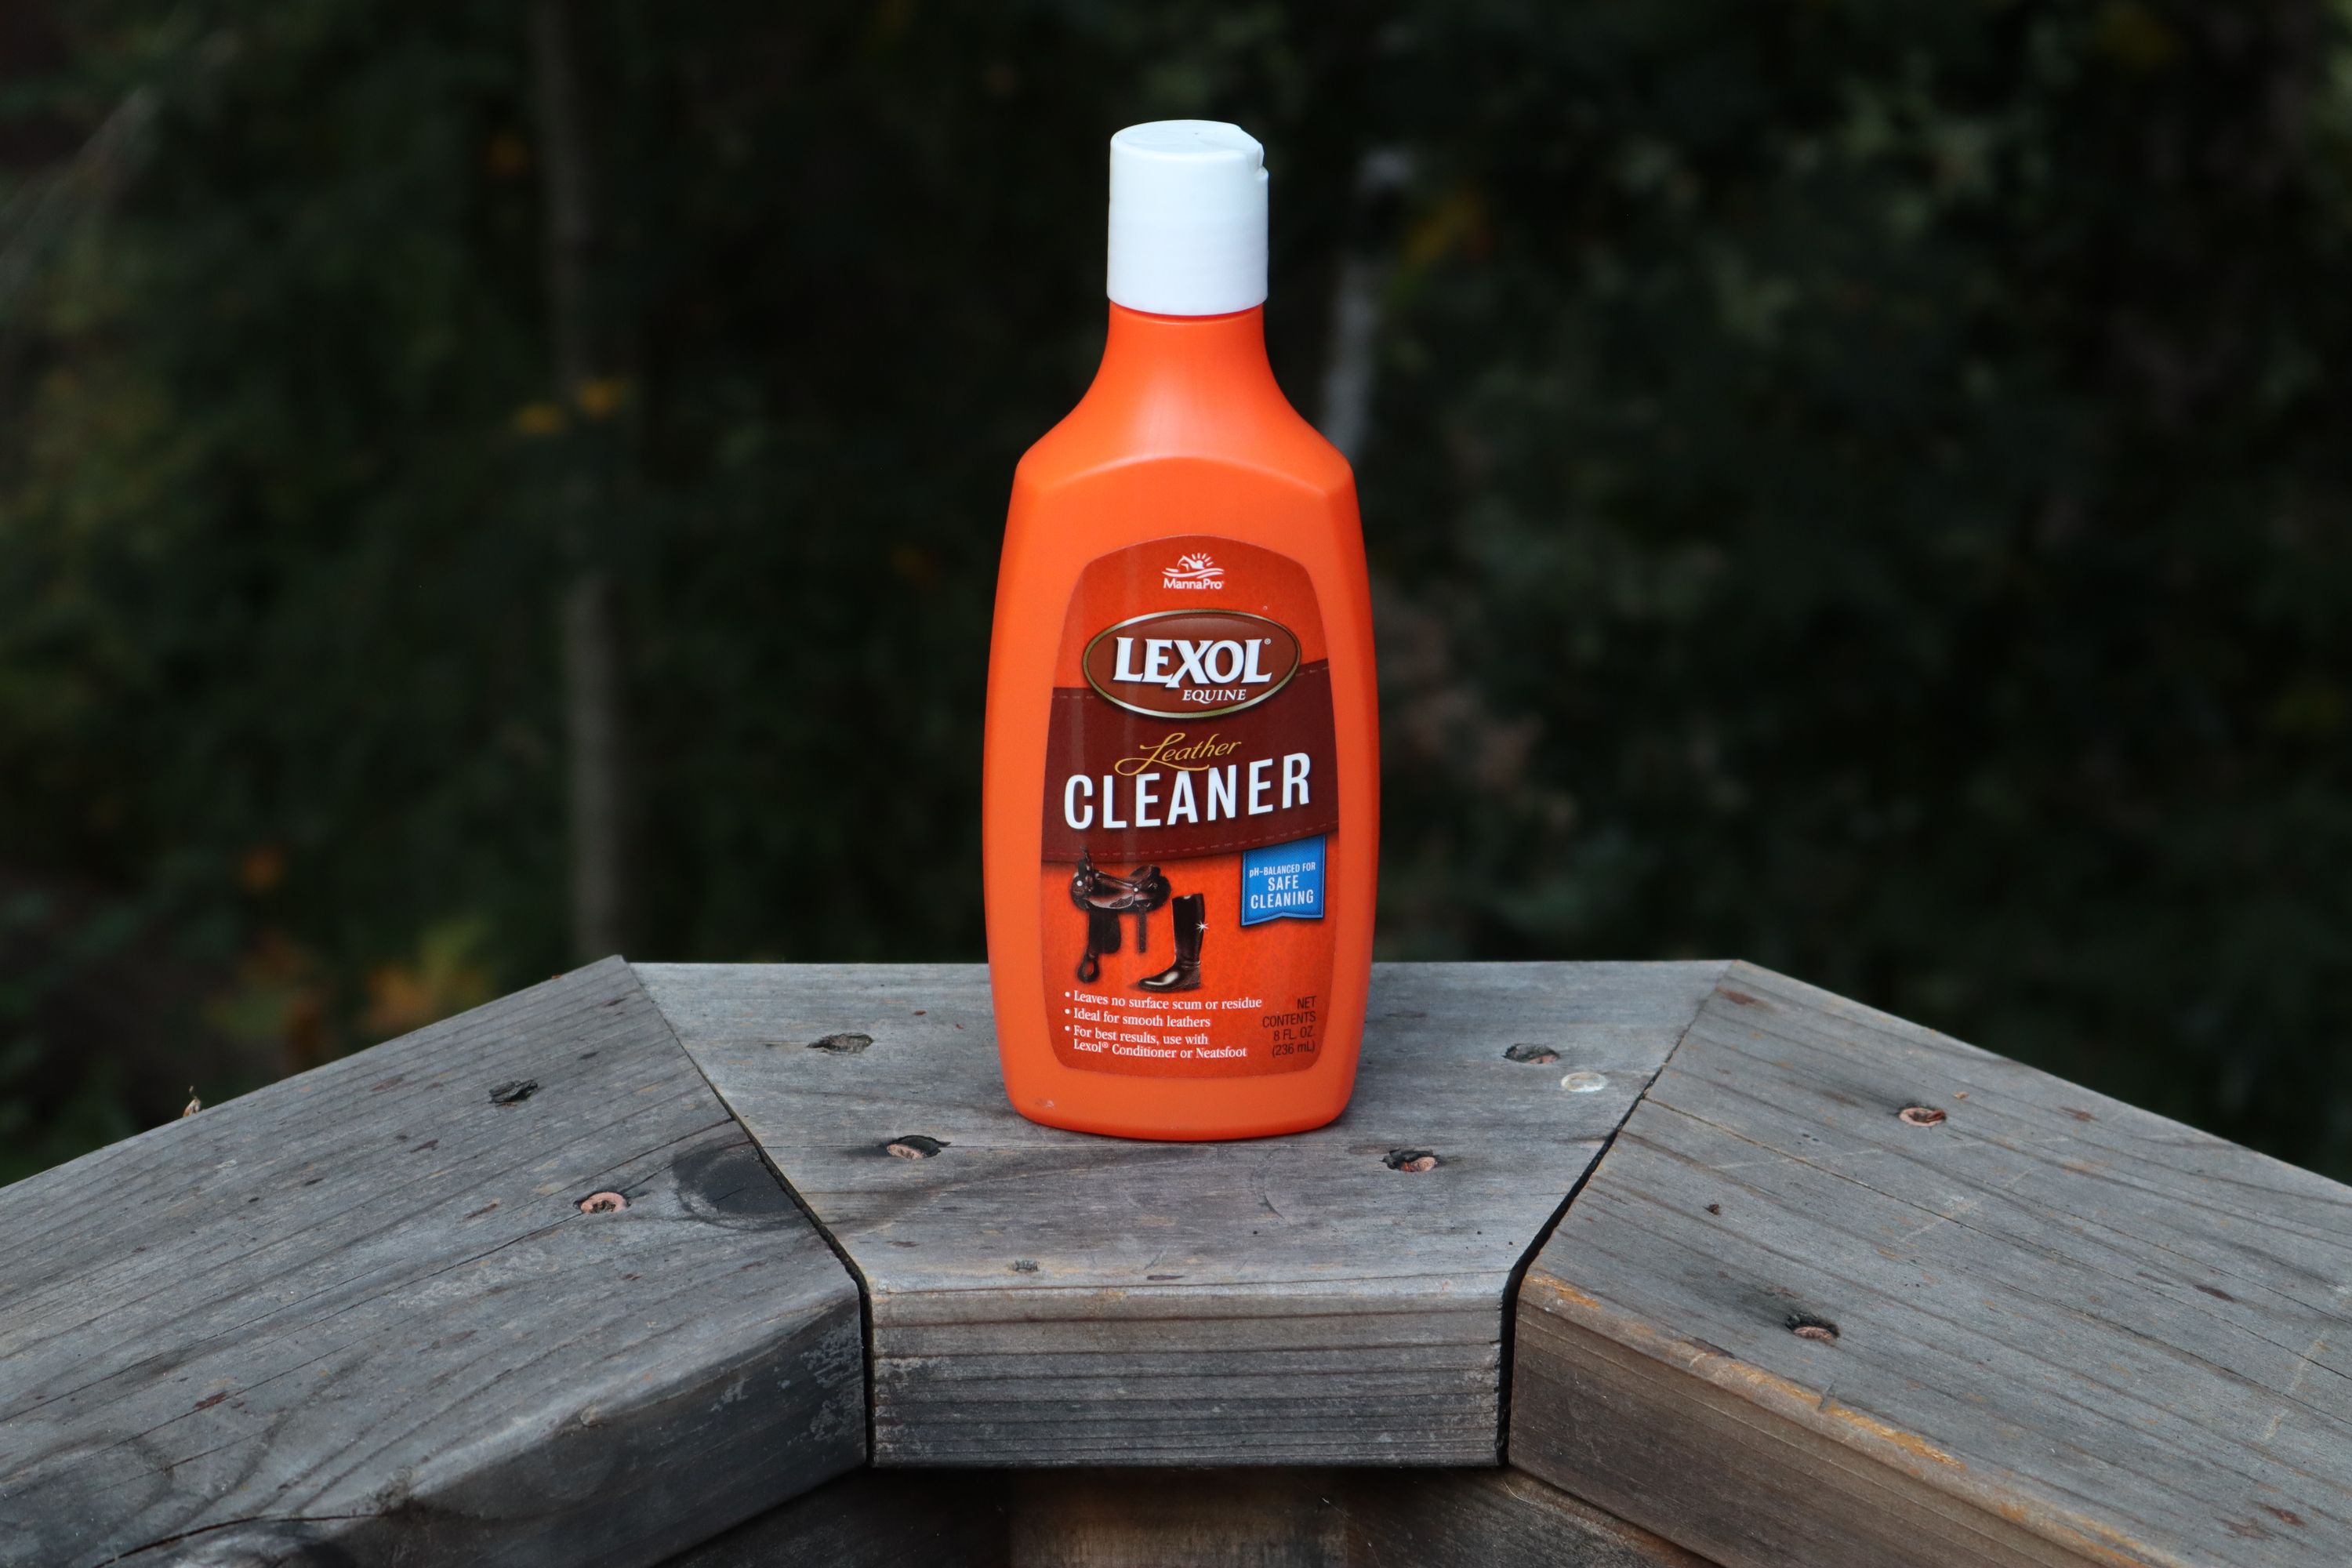 Lexol Cleaner, All Leather, Step 1 - 16.9 oz